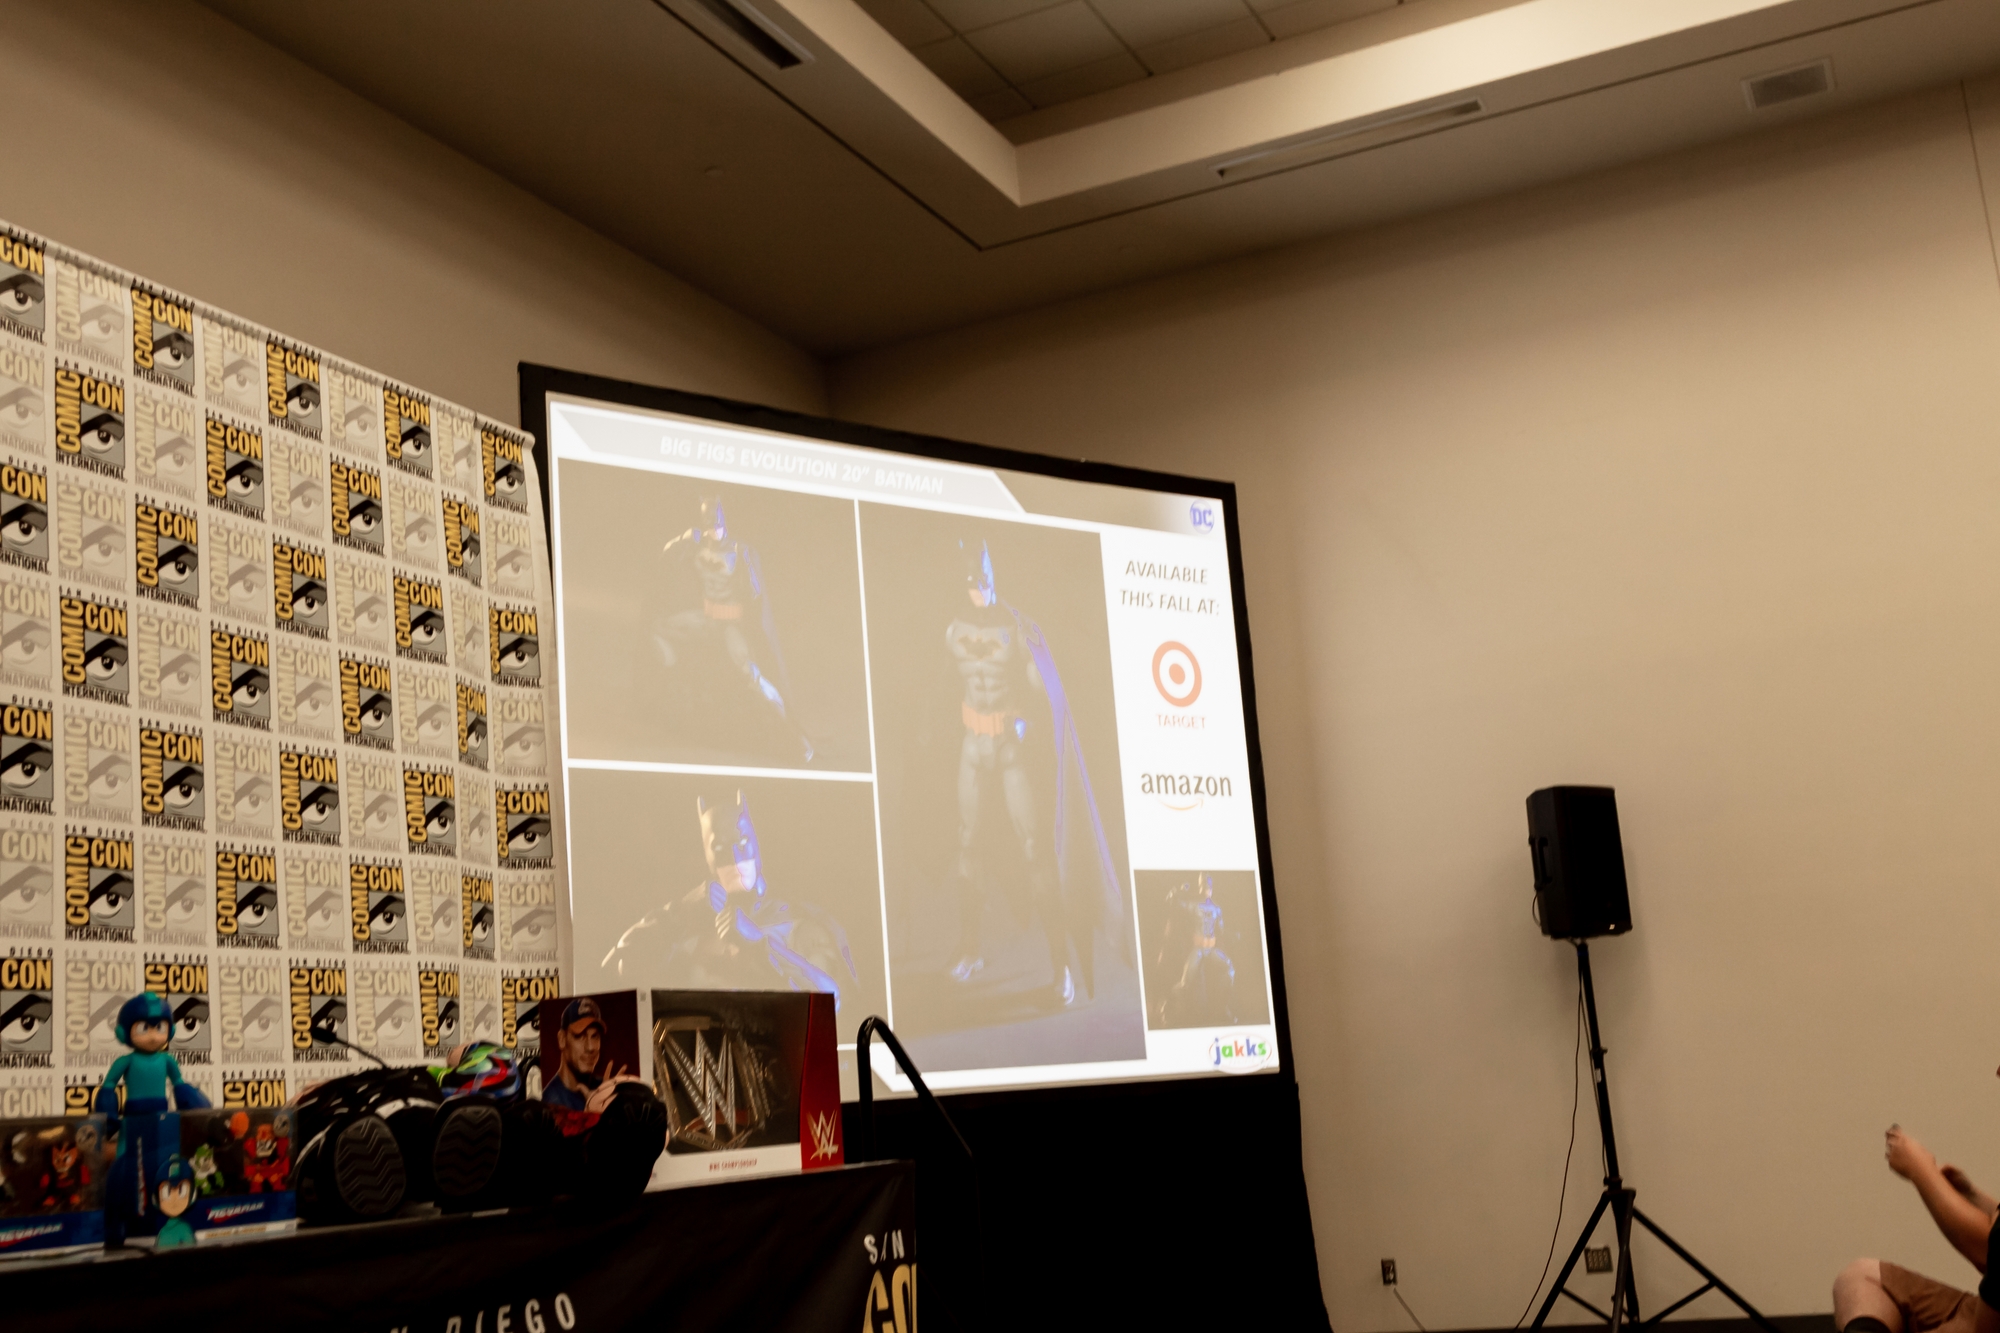 JAKKS-Panel-2018-San-Diego-Comic-Con-001.jpg